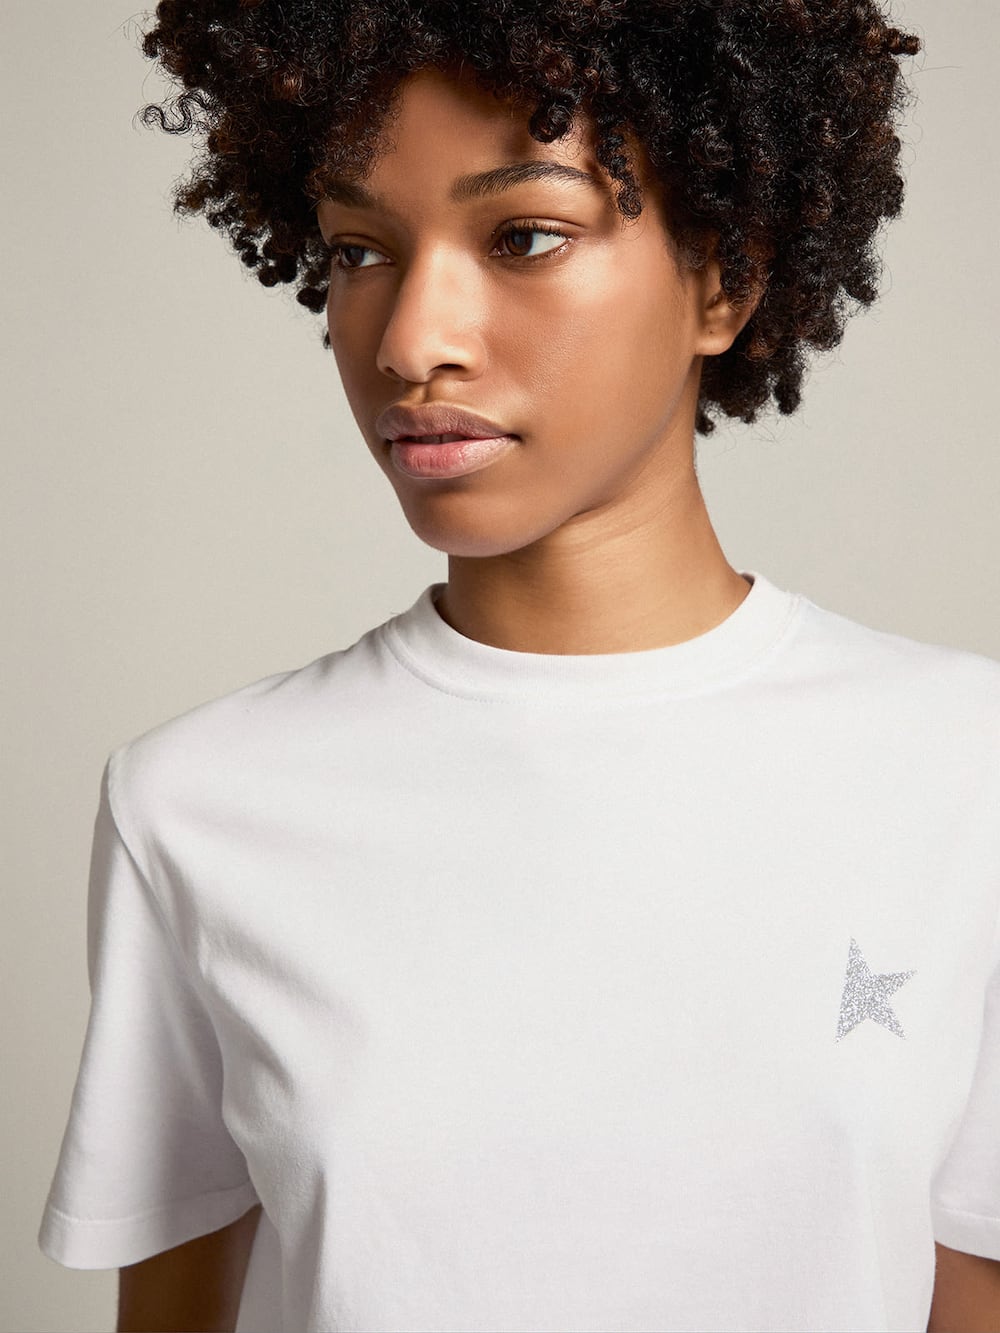 Golden Goose - Camiseta feminina branca com estrela de glitter prateado na frente in 